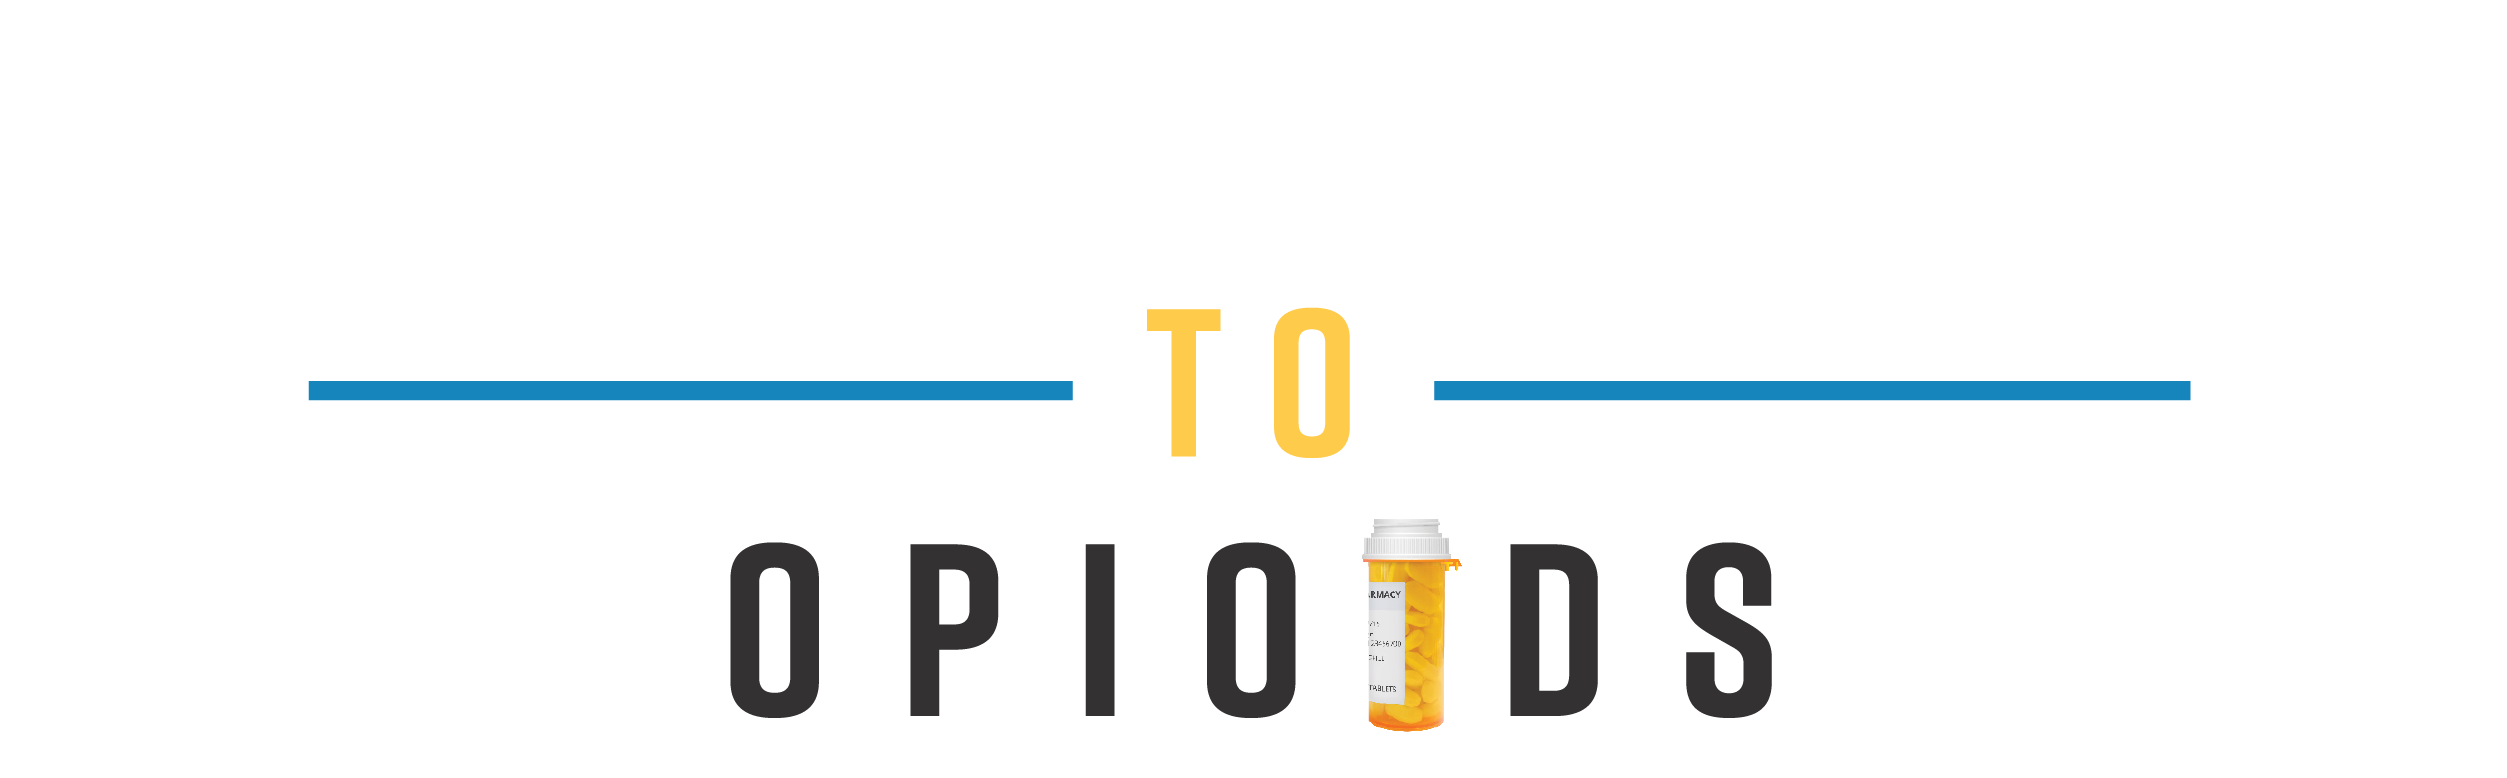 Alternatives to Opioids